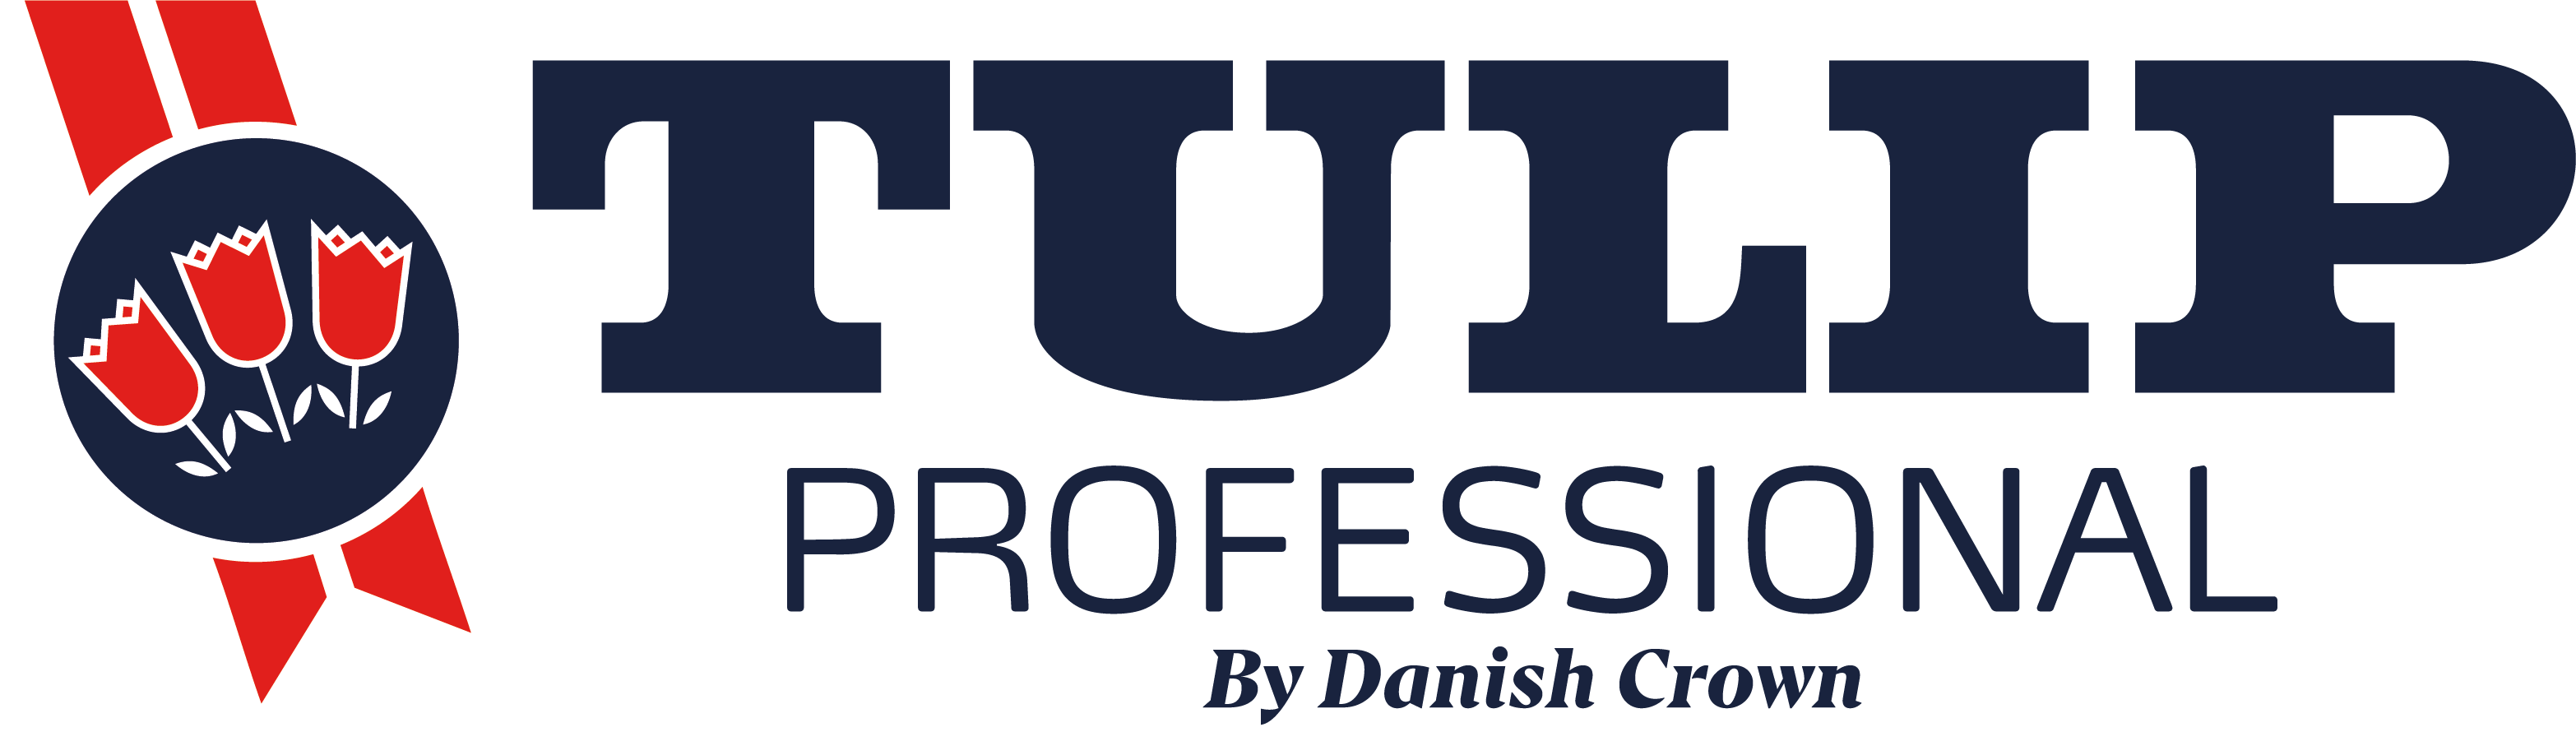 Tulip Professional By Danish Crown Logo